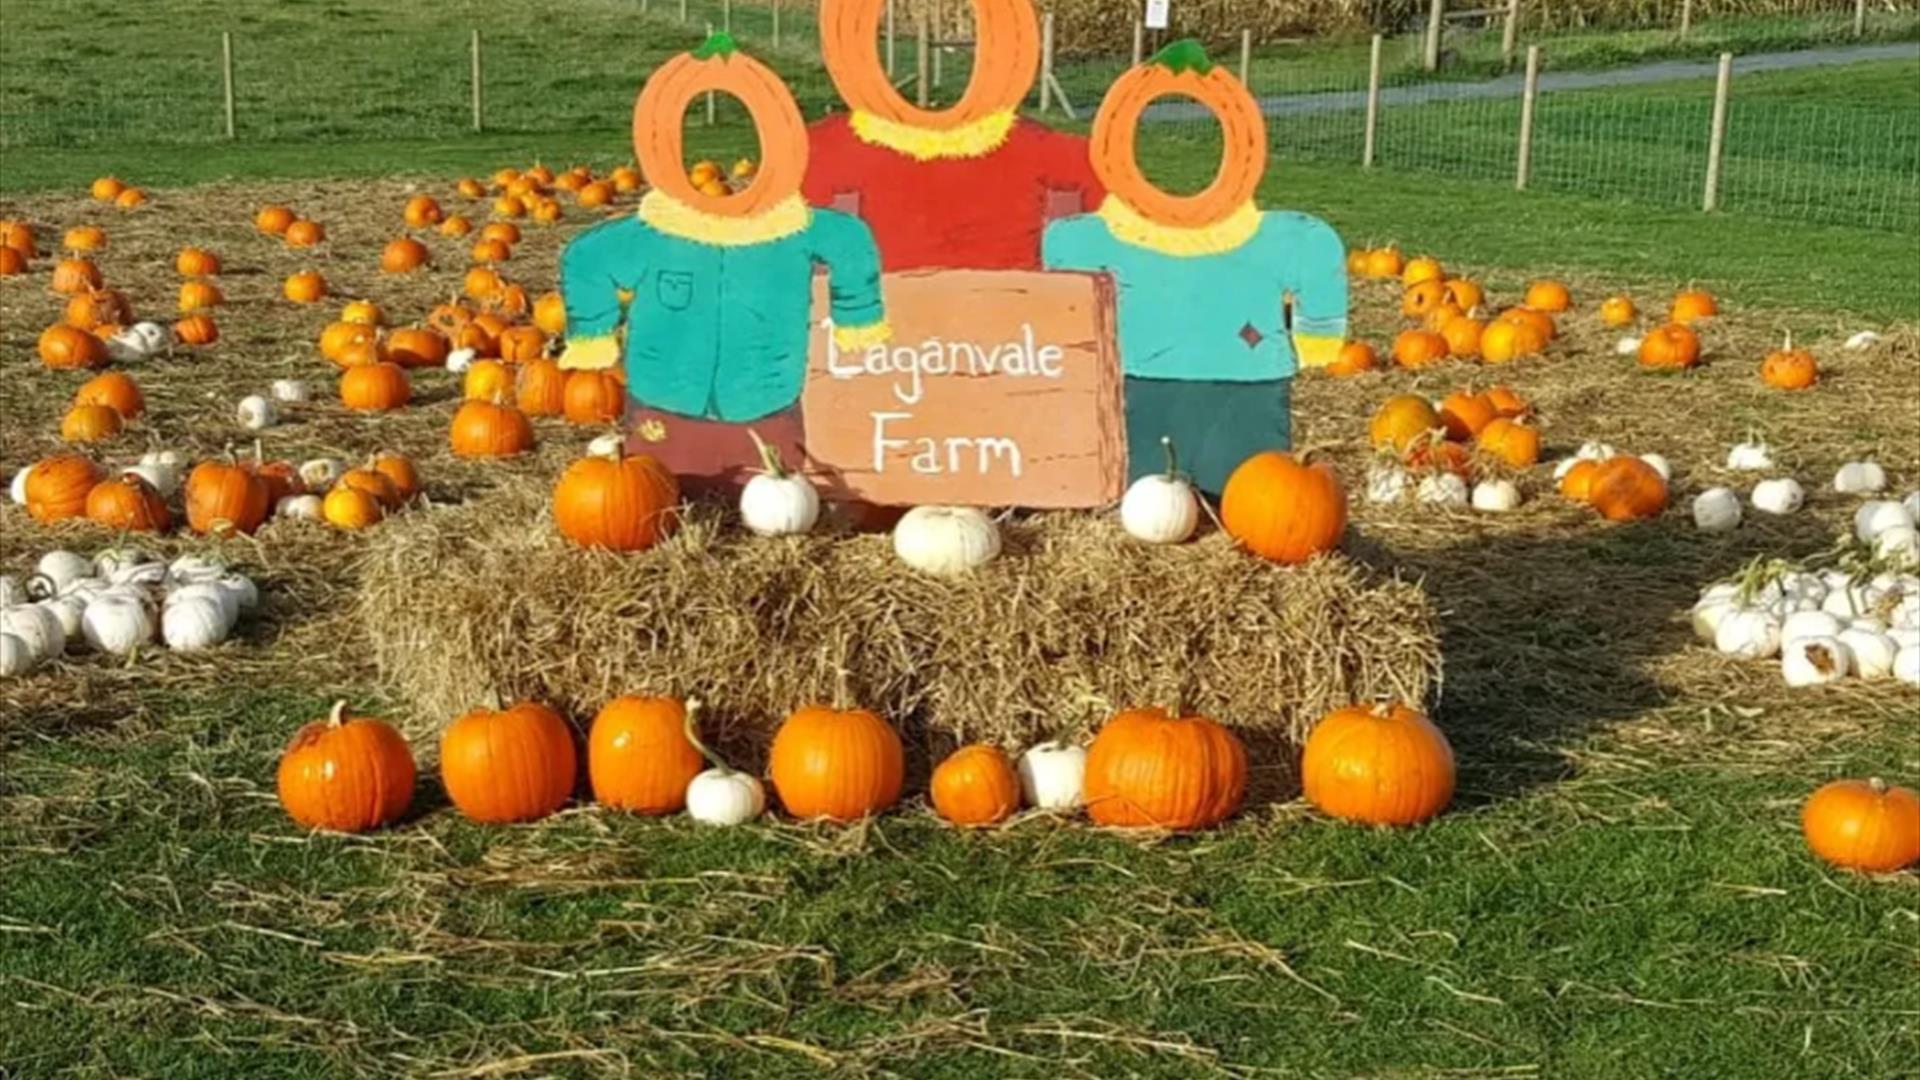 Laganvale Farm pumpkin patch at Halloween